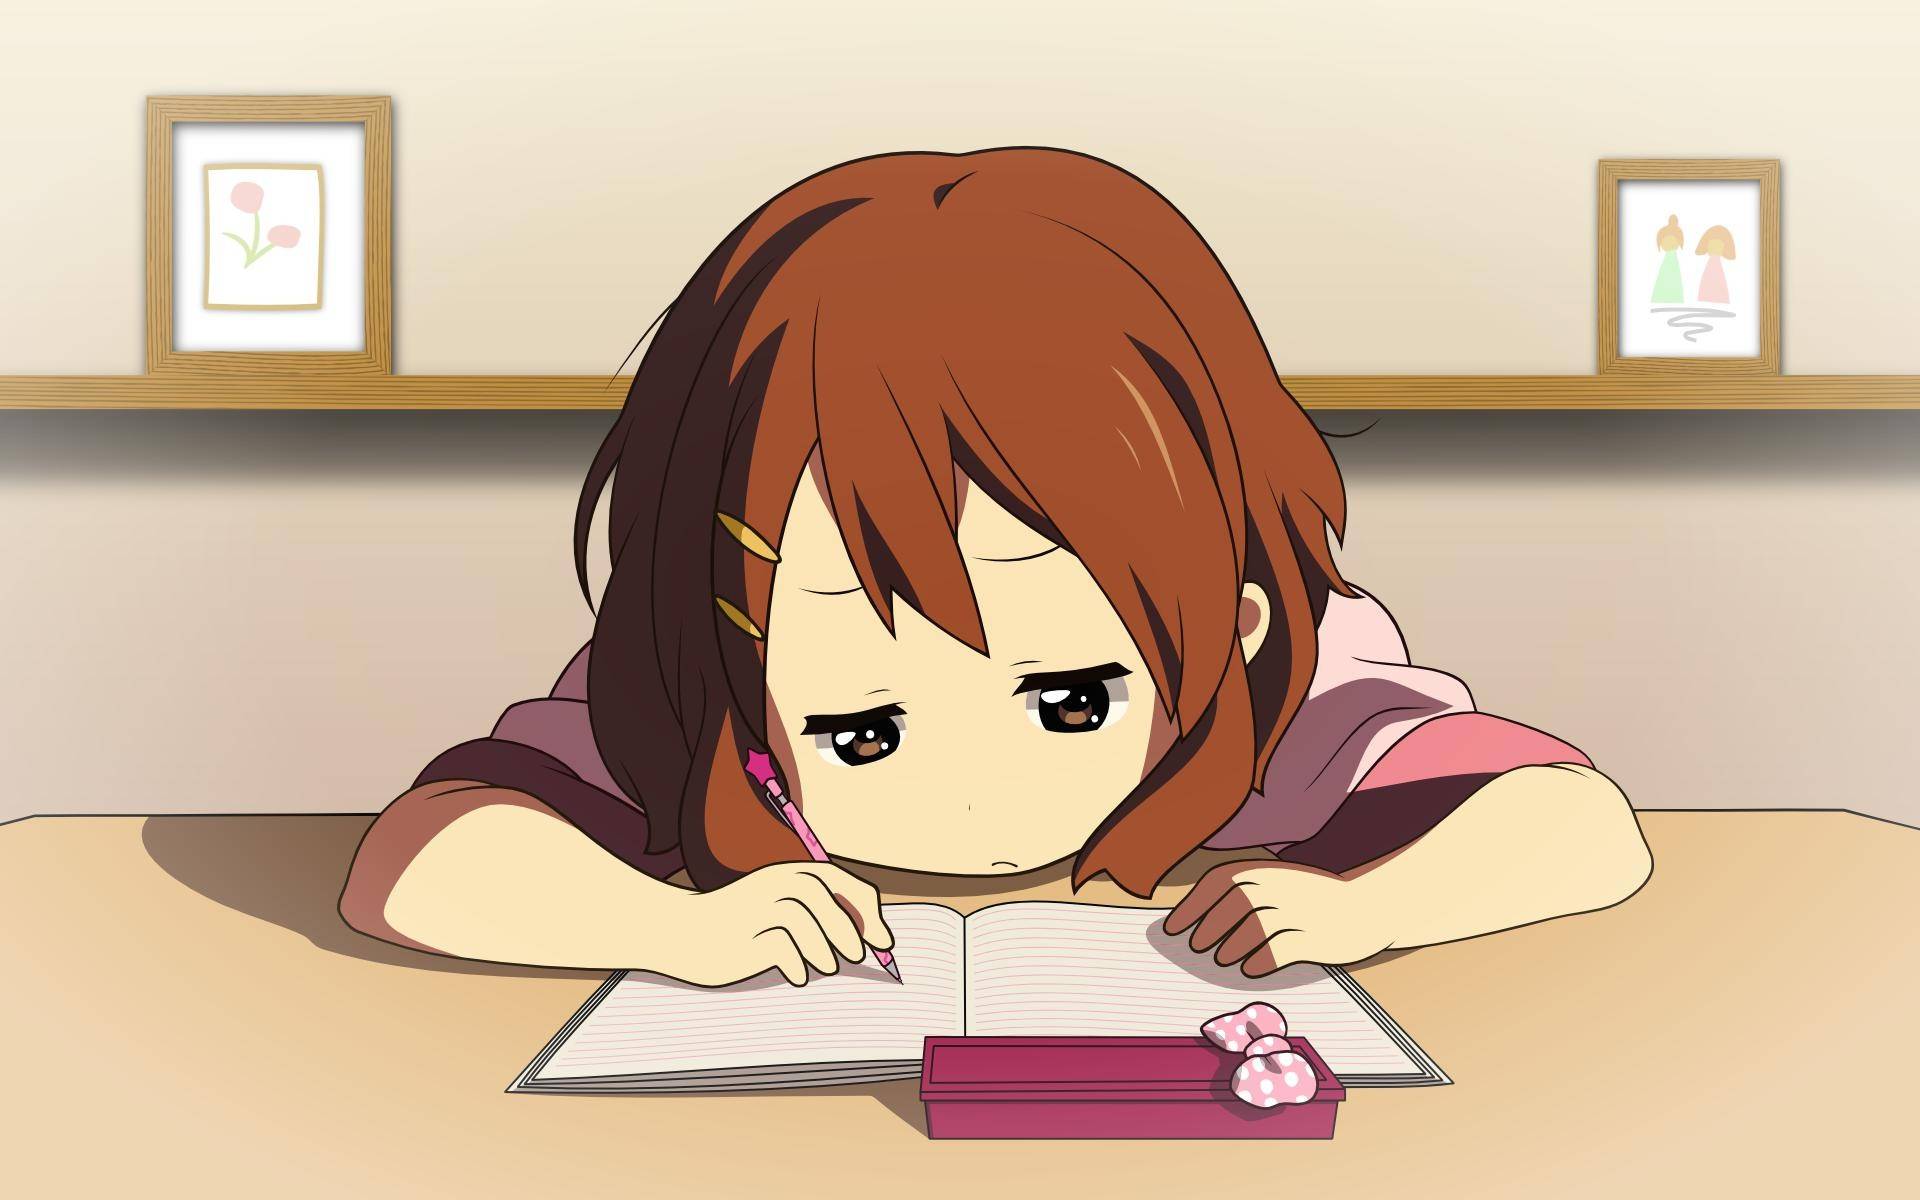 Screenshots Stuffpoint Anime K On Image Wallpaper Yui Studying Tweet